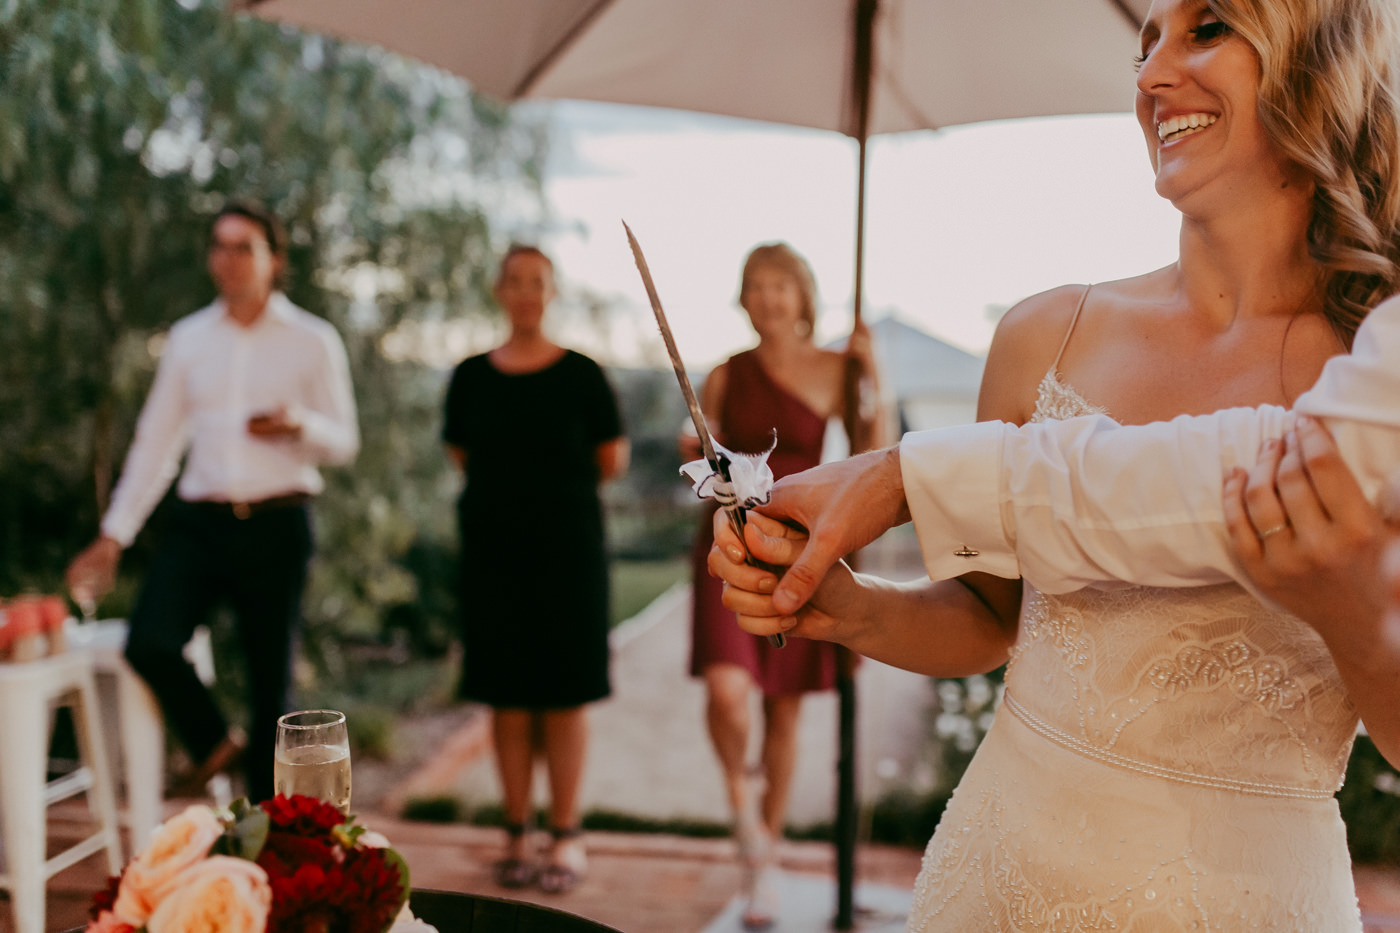 Anthony & Eliet - Wagga Wagga Wedding - Country NSW - Samantha Heather Photography-169.jpg